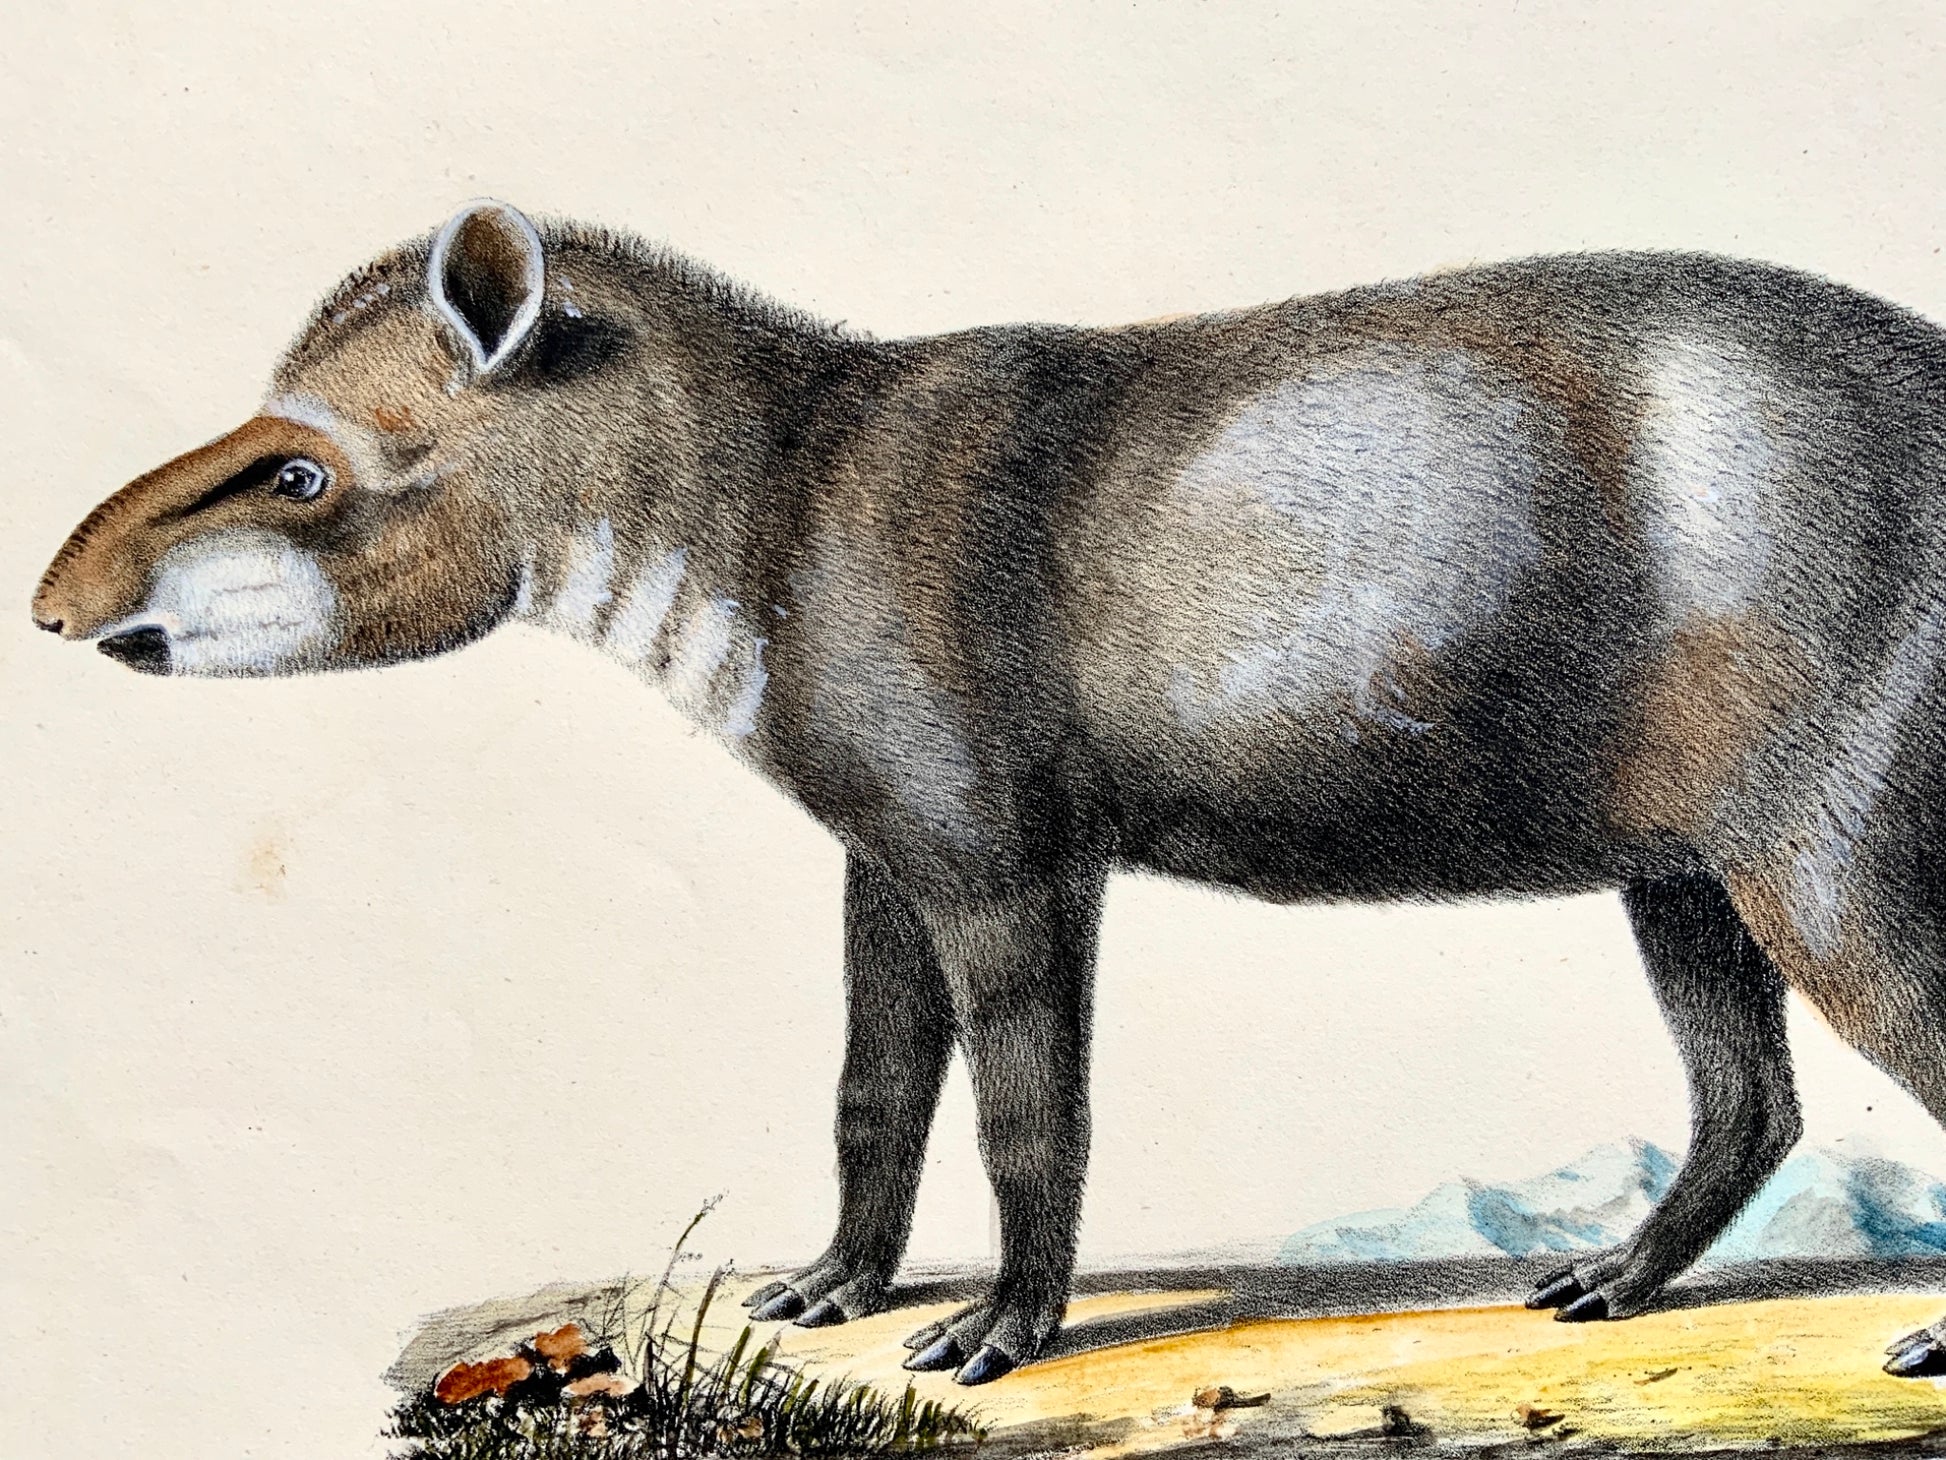 1824 American Tapir - Mammal - K.J. Brodtmann hand colored FOLIO lithograph